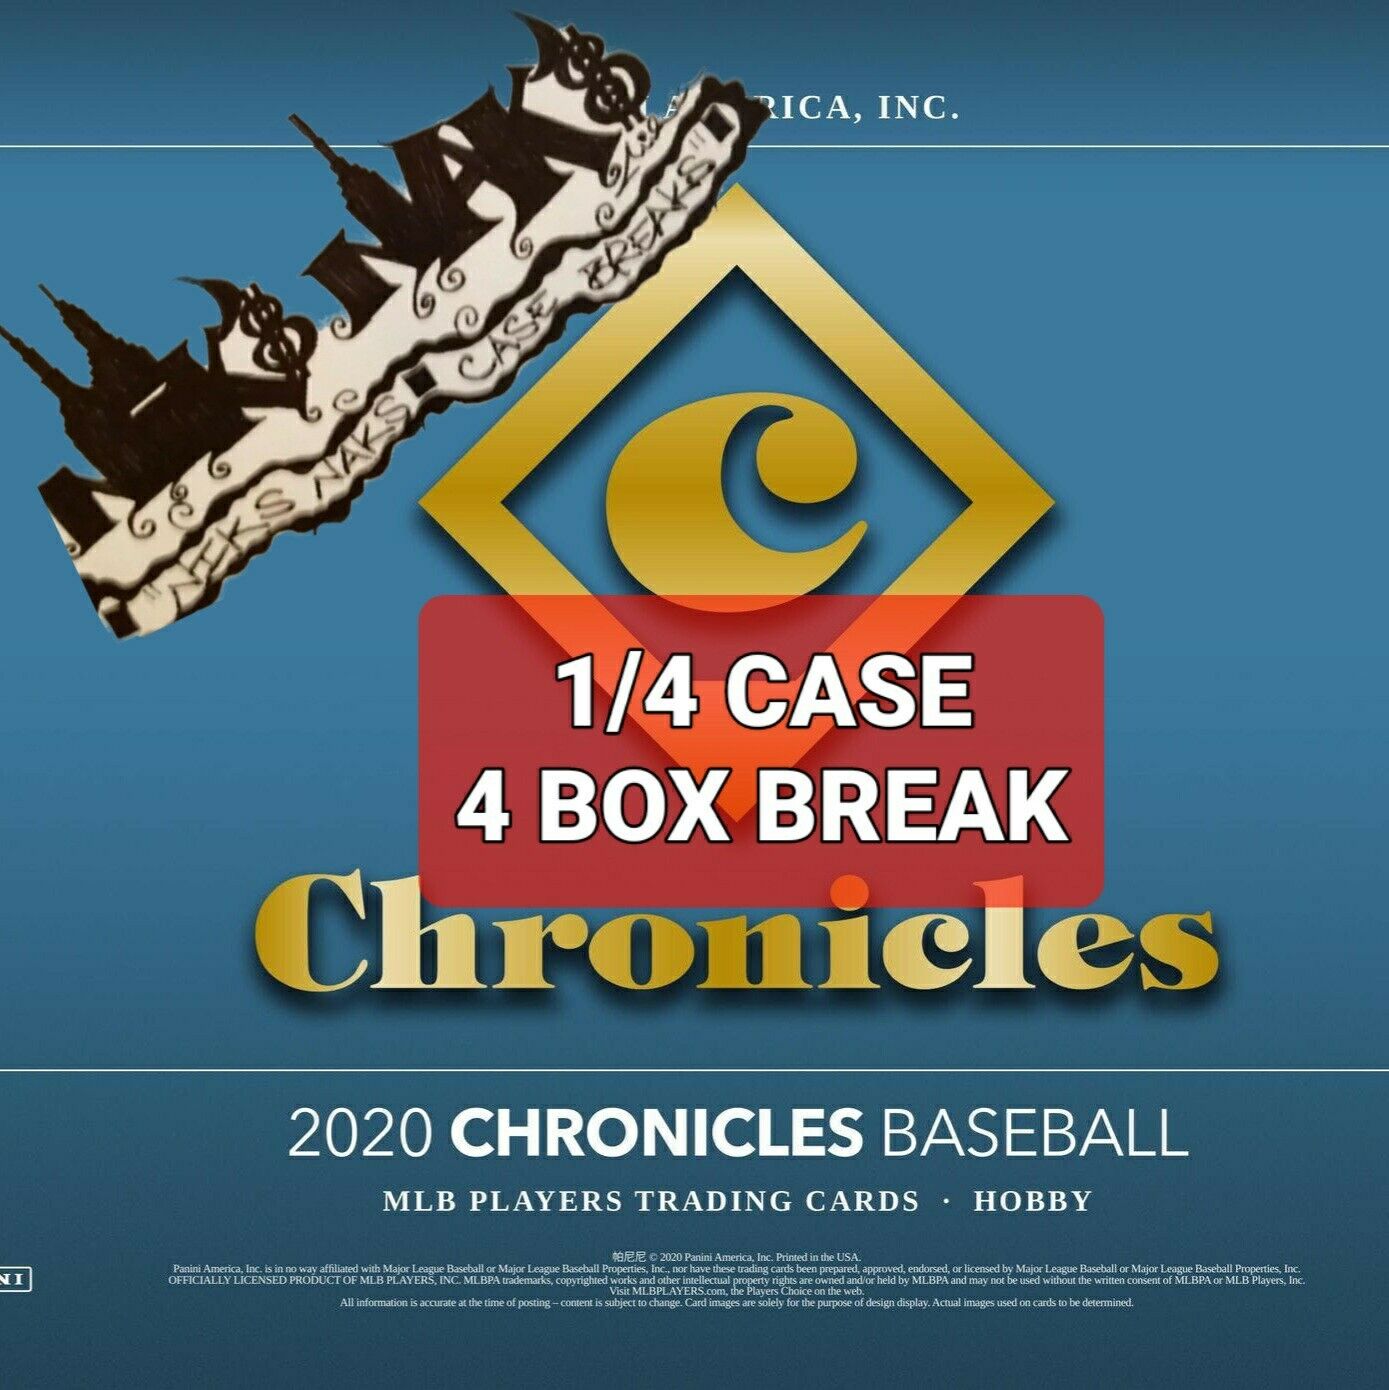 SEATTLE MARINERS 2020 CHRONICLES BASEBALL HOBBY 1/4 CASE 4 BOX BREAK #96